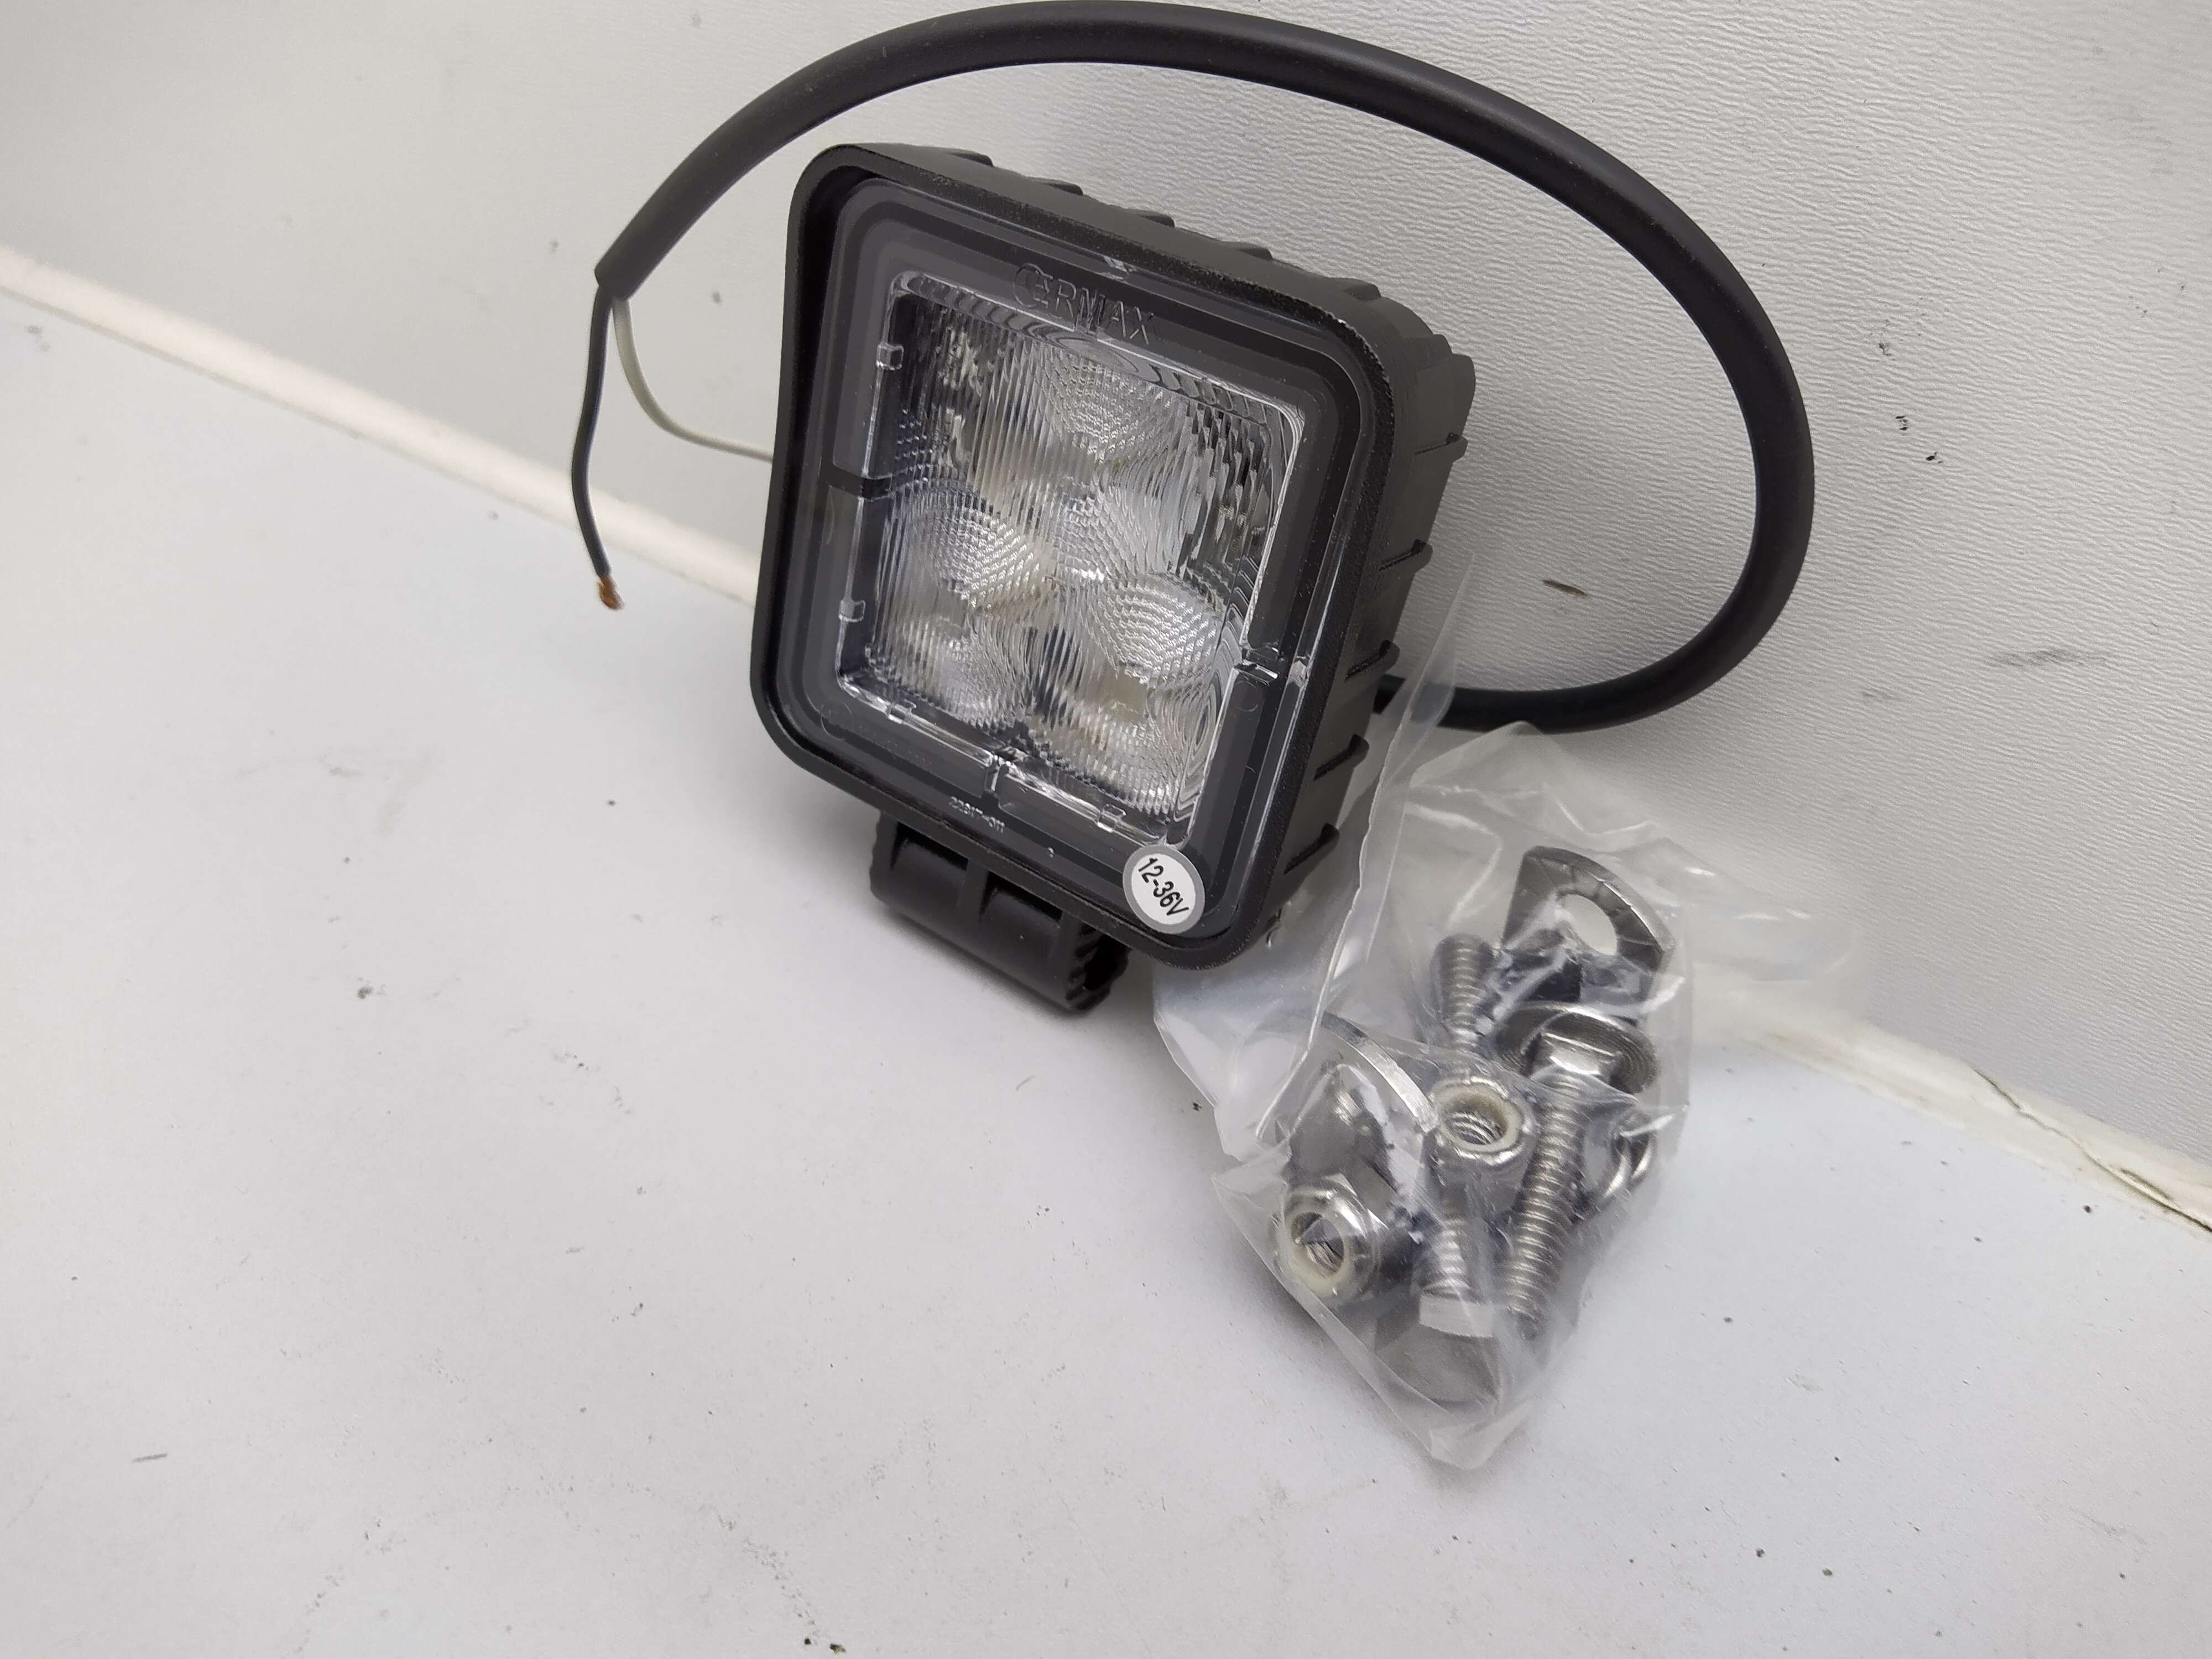 LED Arbeitsscheinwerfer 12-36V